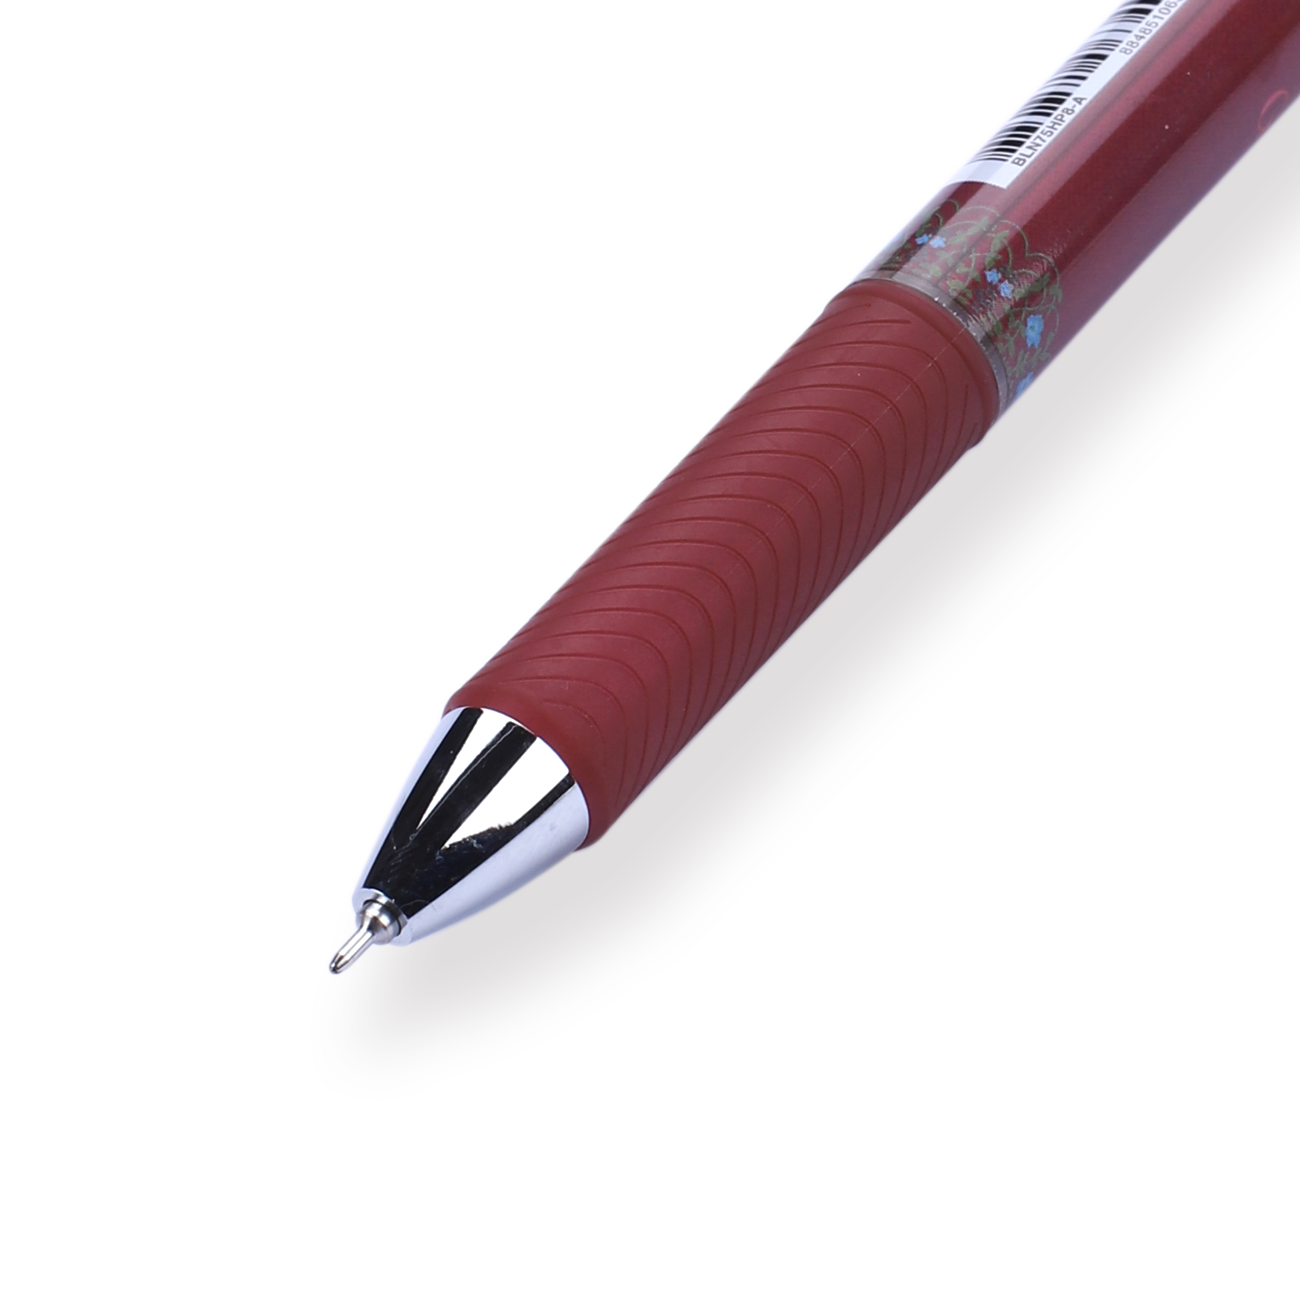 Harry Potter Limited Edition Erasable Gel Pen - 0.5 mm - White